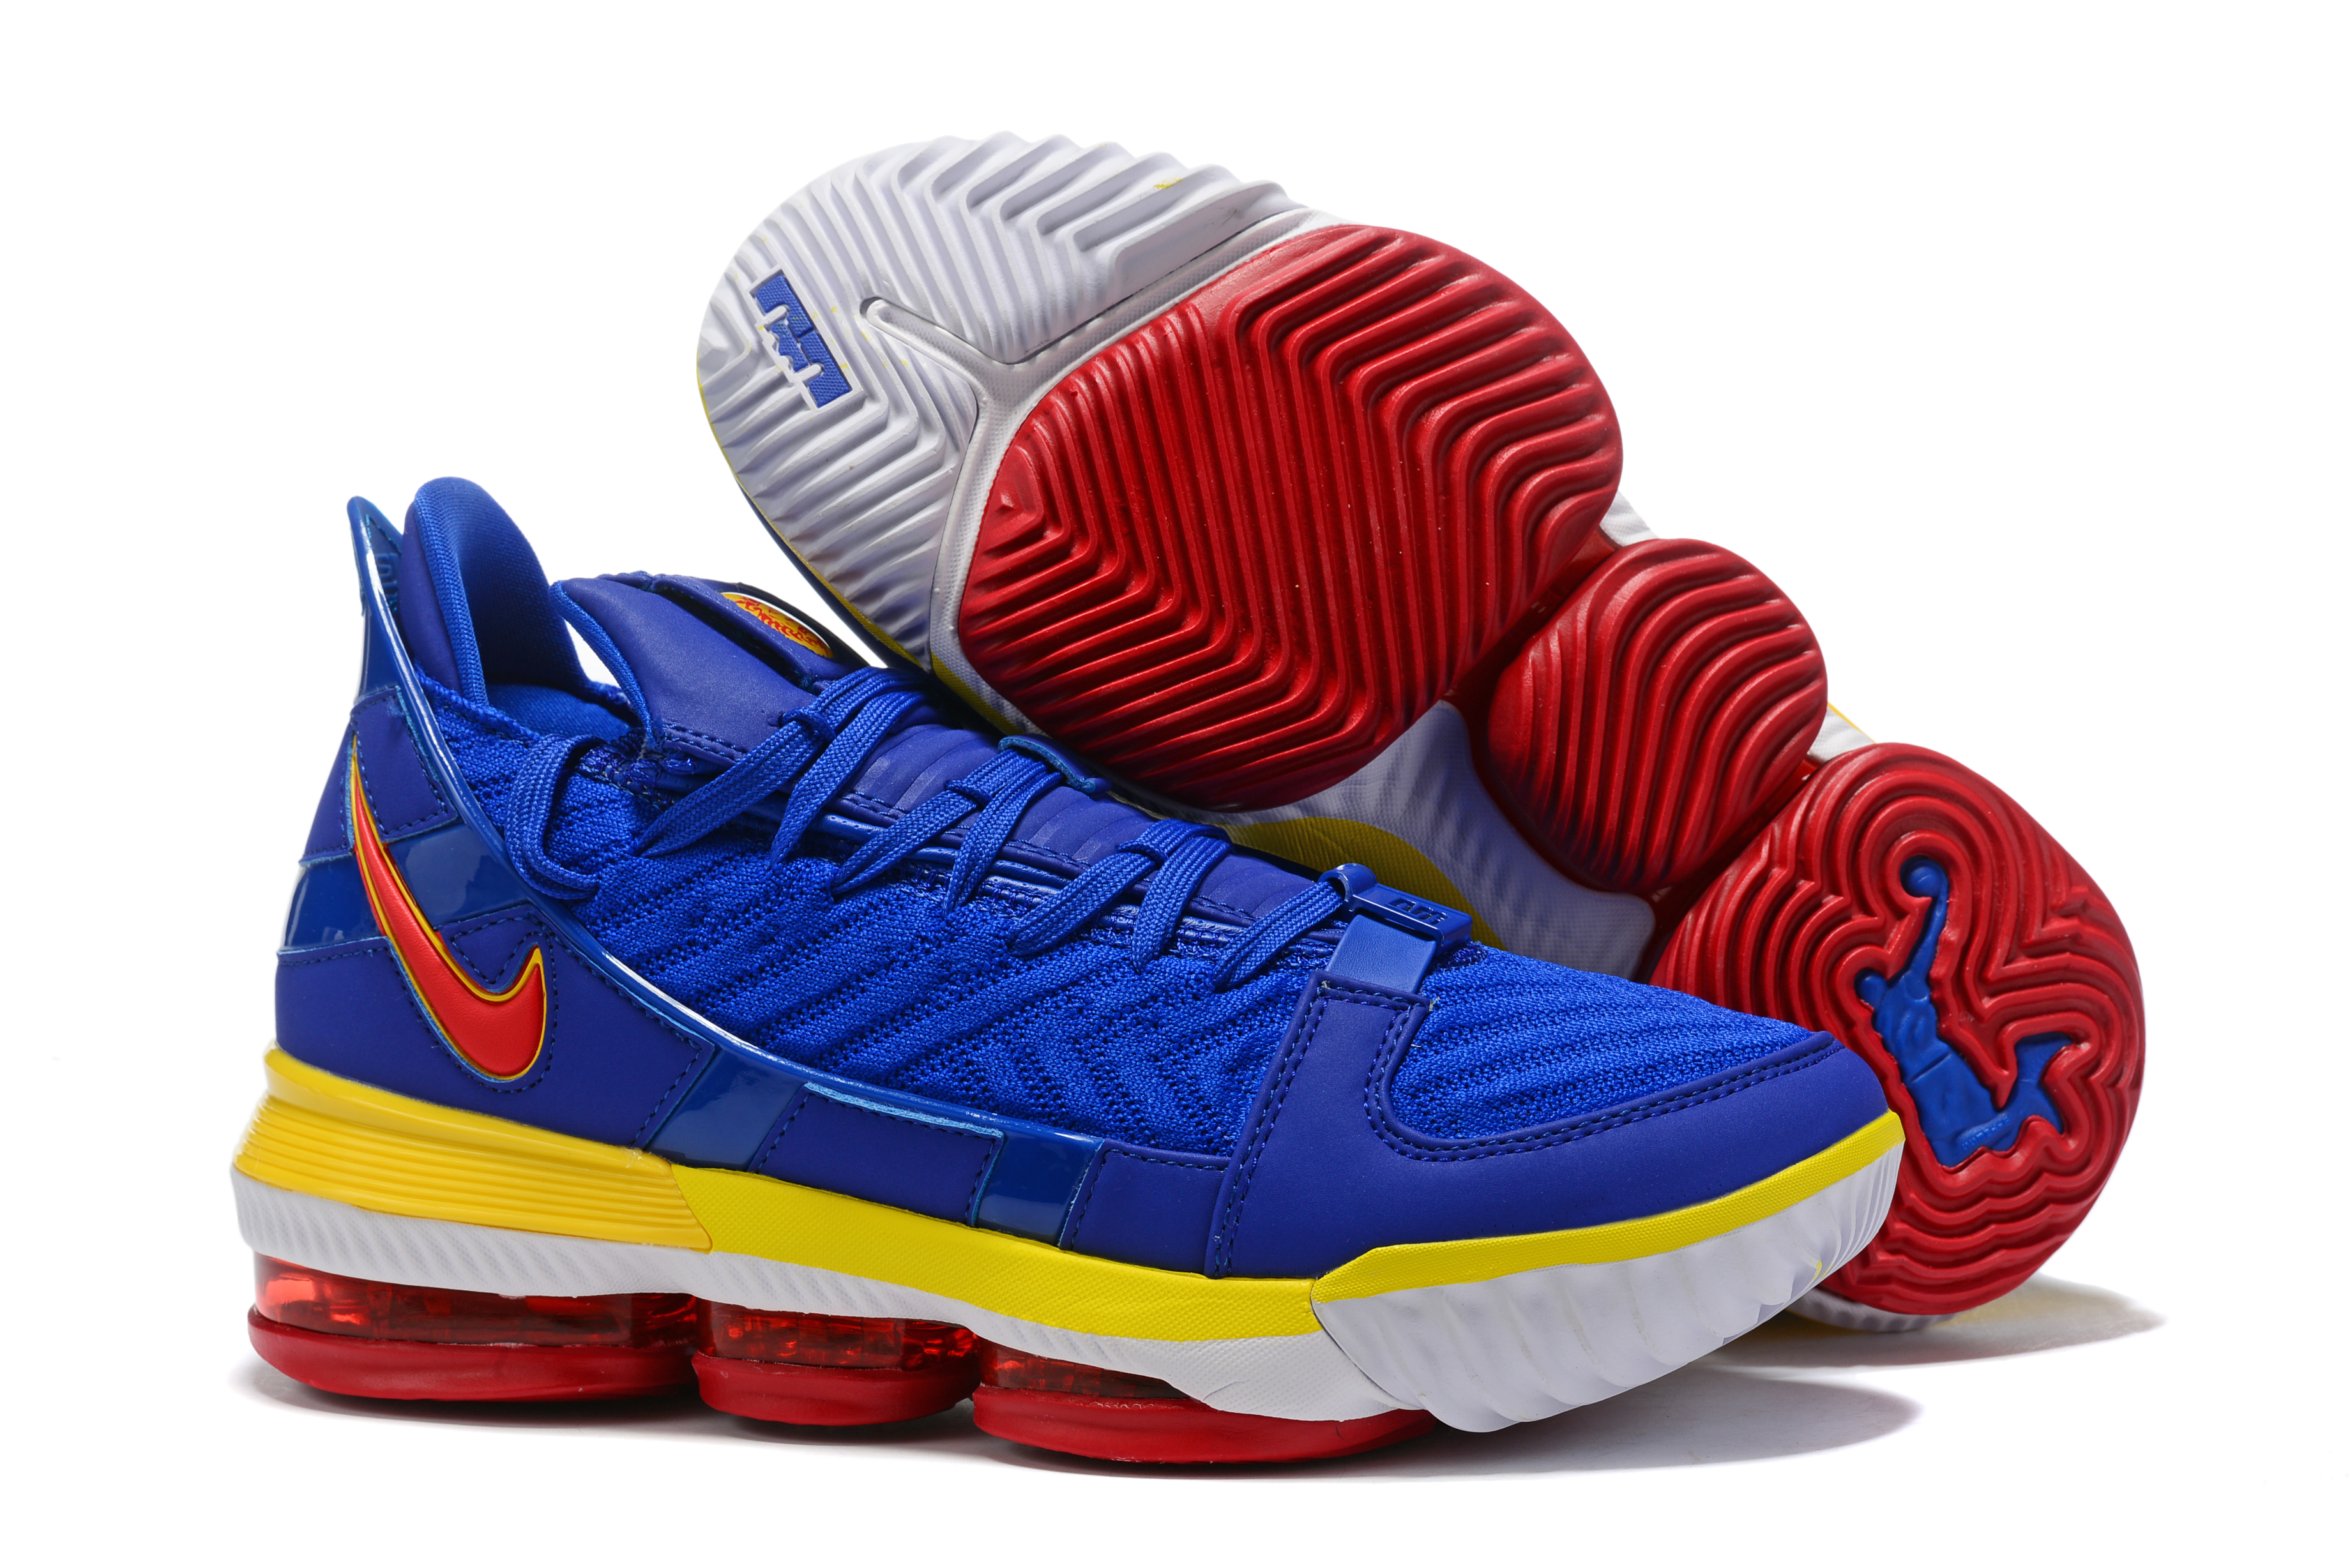 Nike LeBron 16 “SB Blue” For Sale – The 